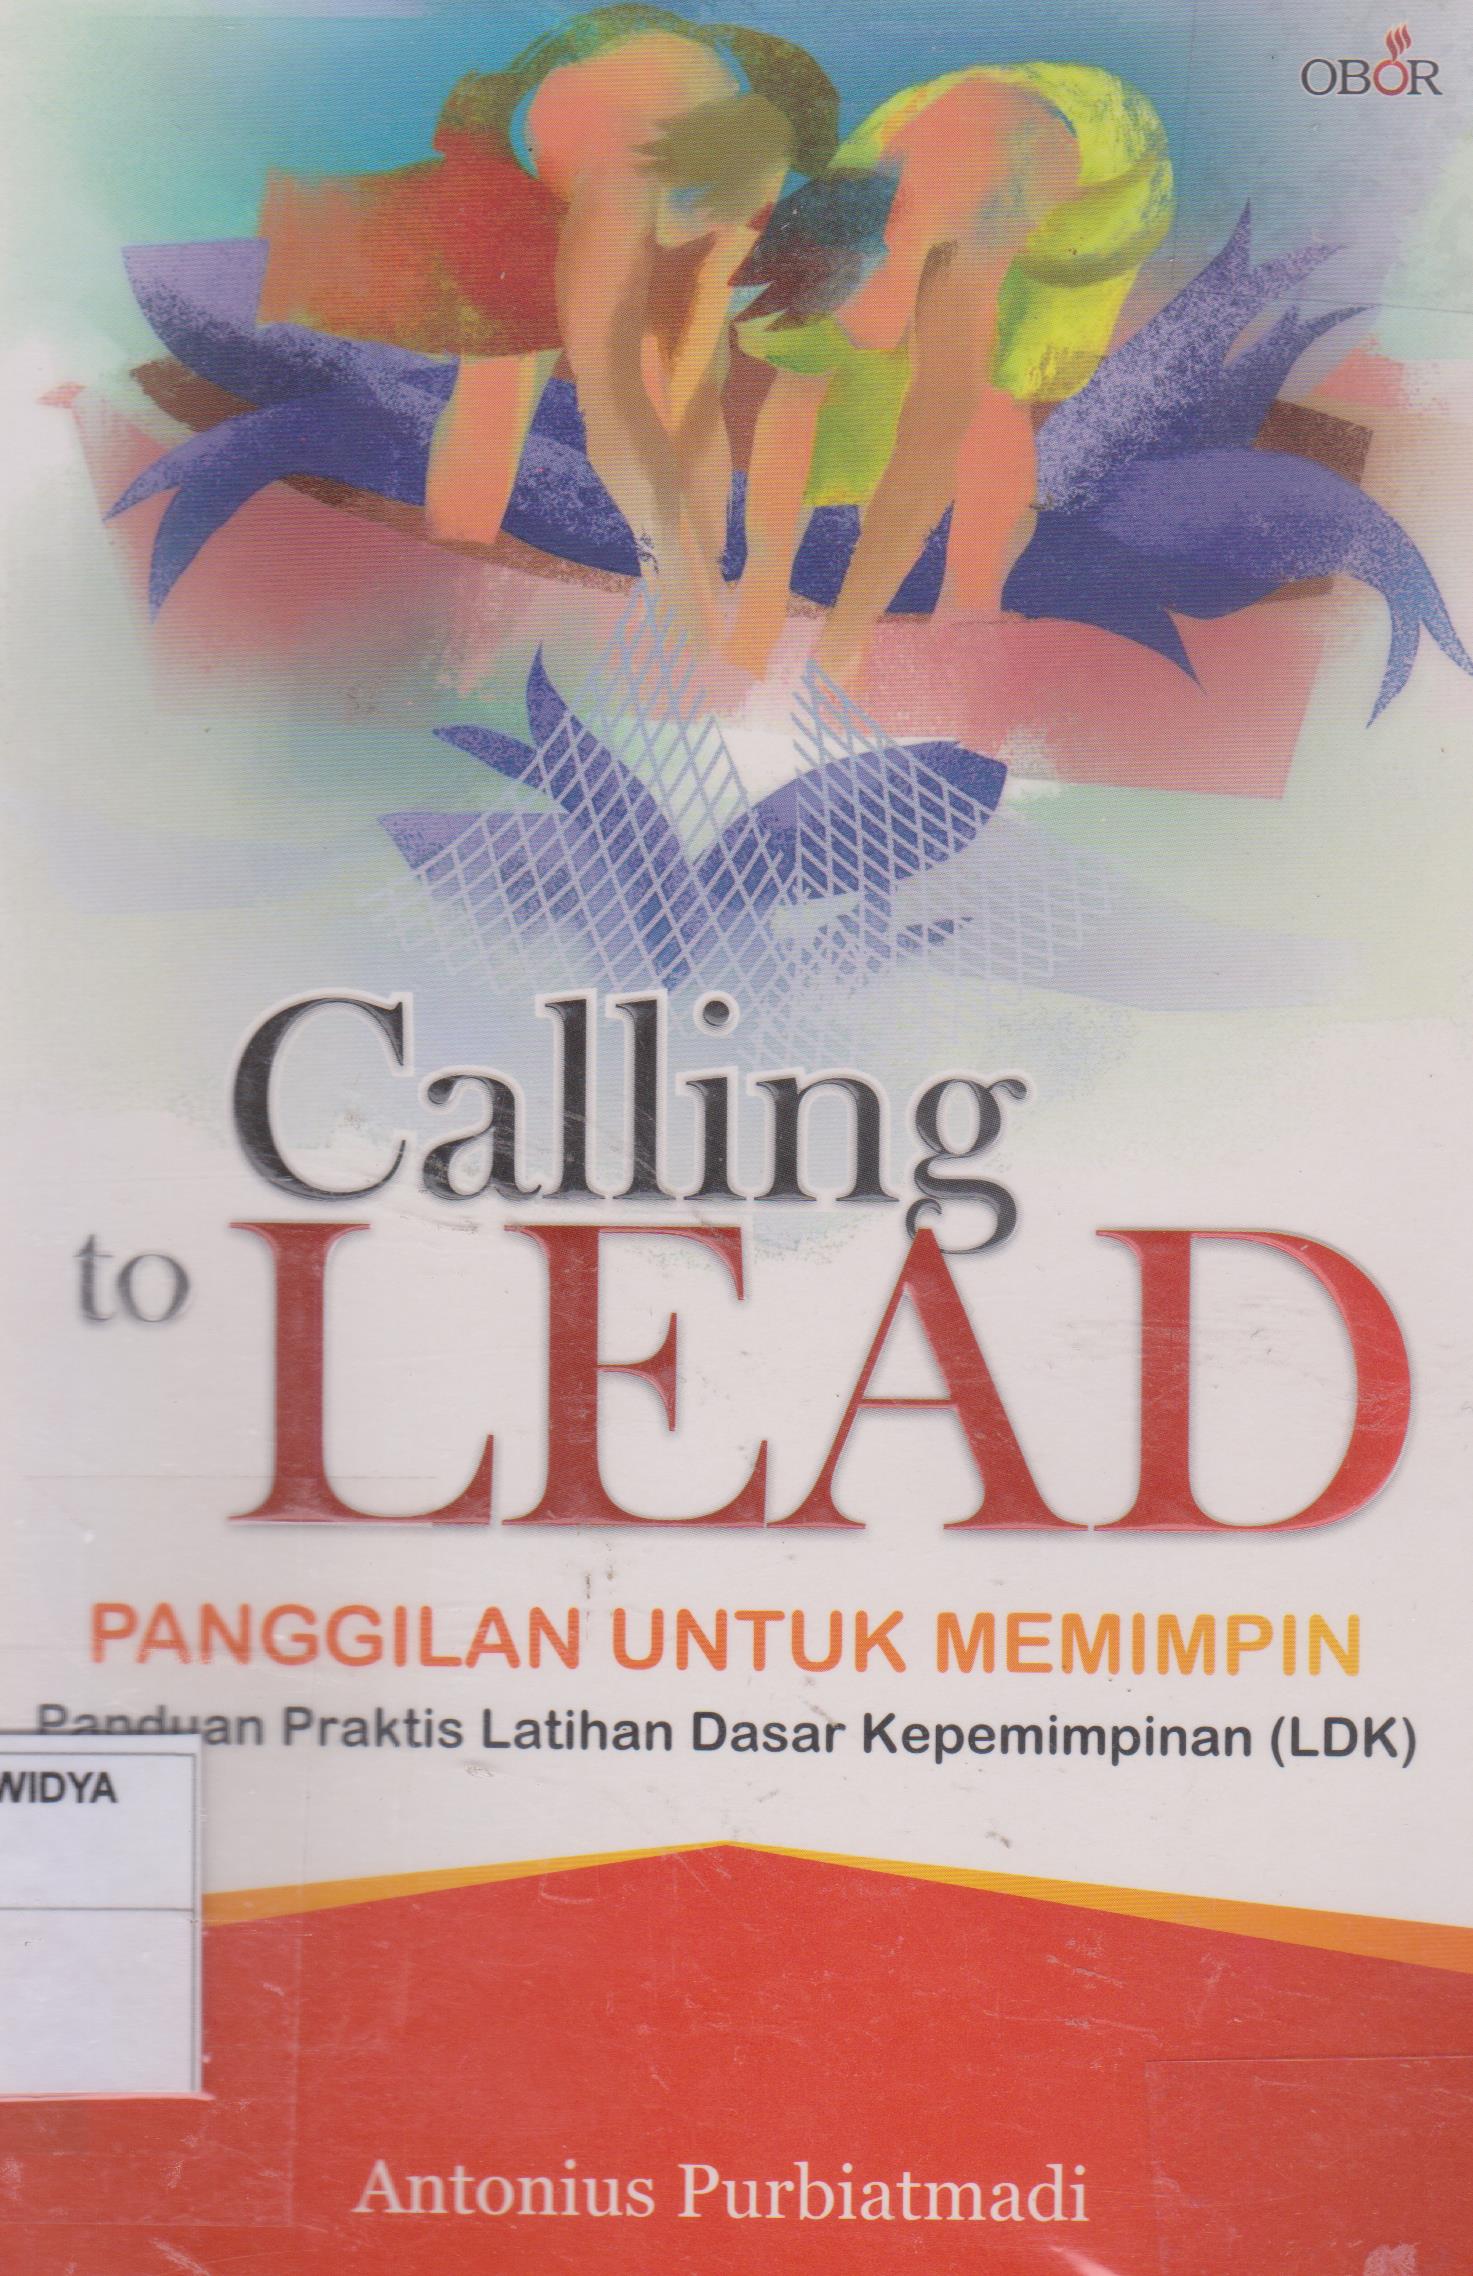 Calling to Lead (Panggilan untuk Mempimpin) Panduan Praktis Latihan Dasar Kepemimpinan (LDK)